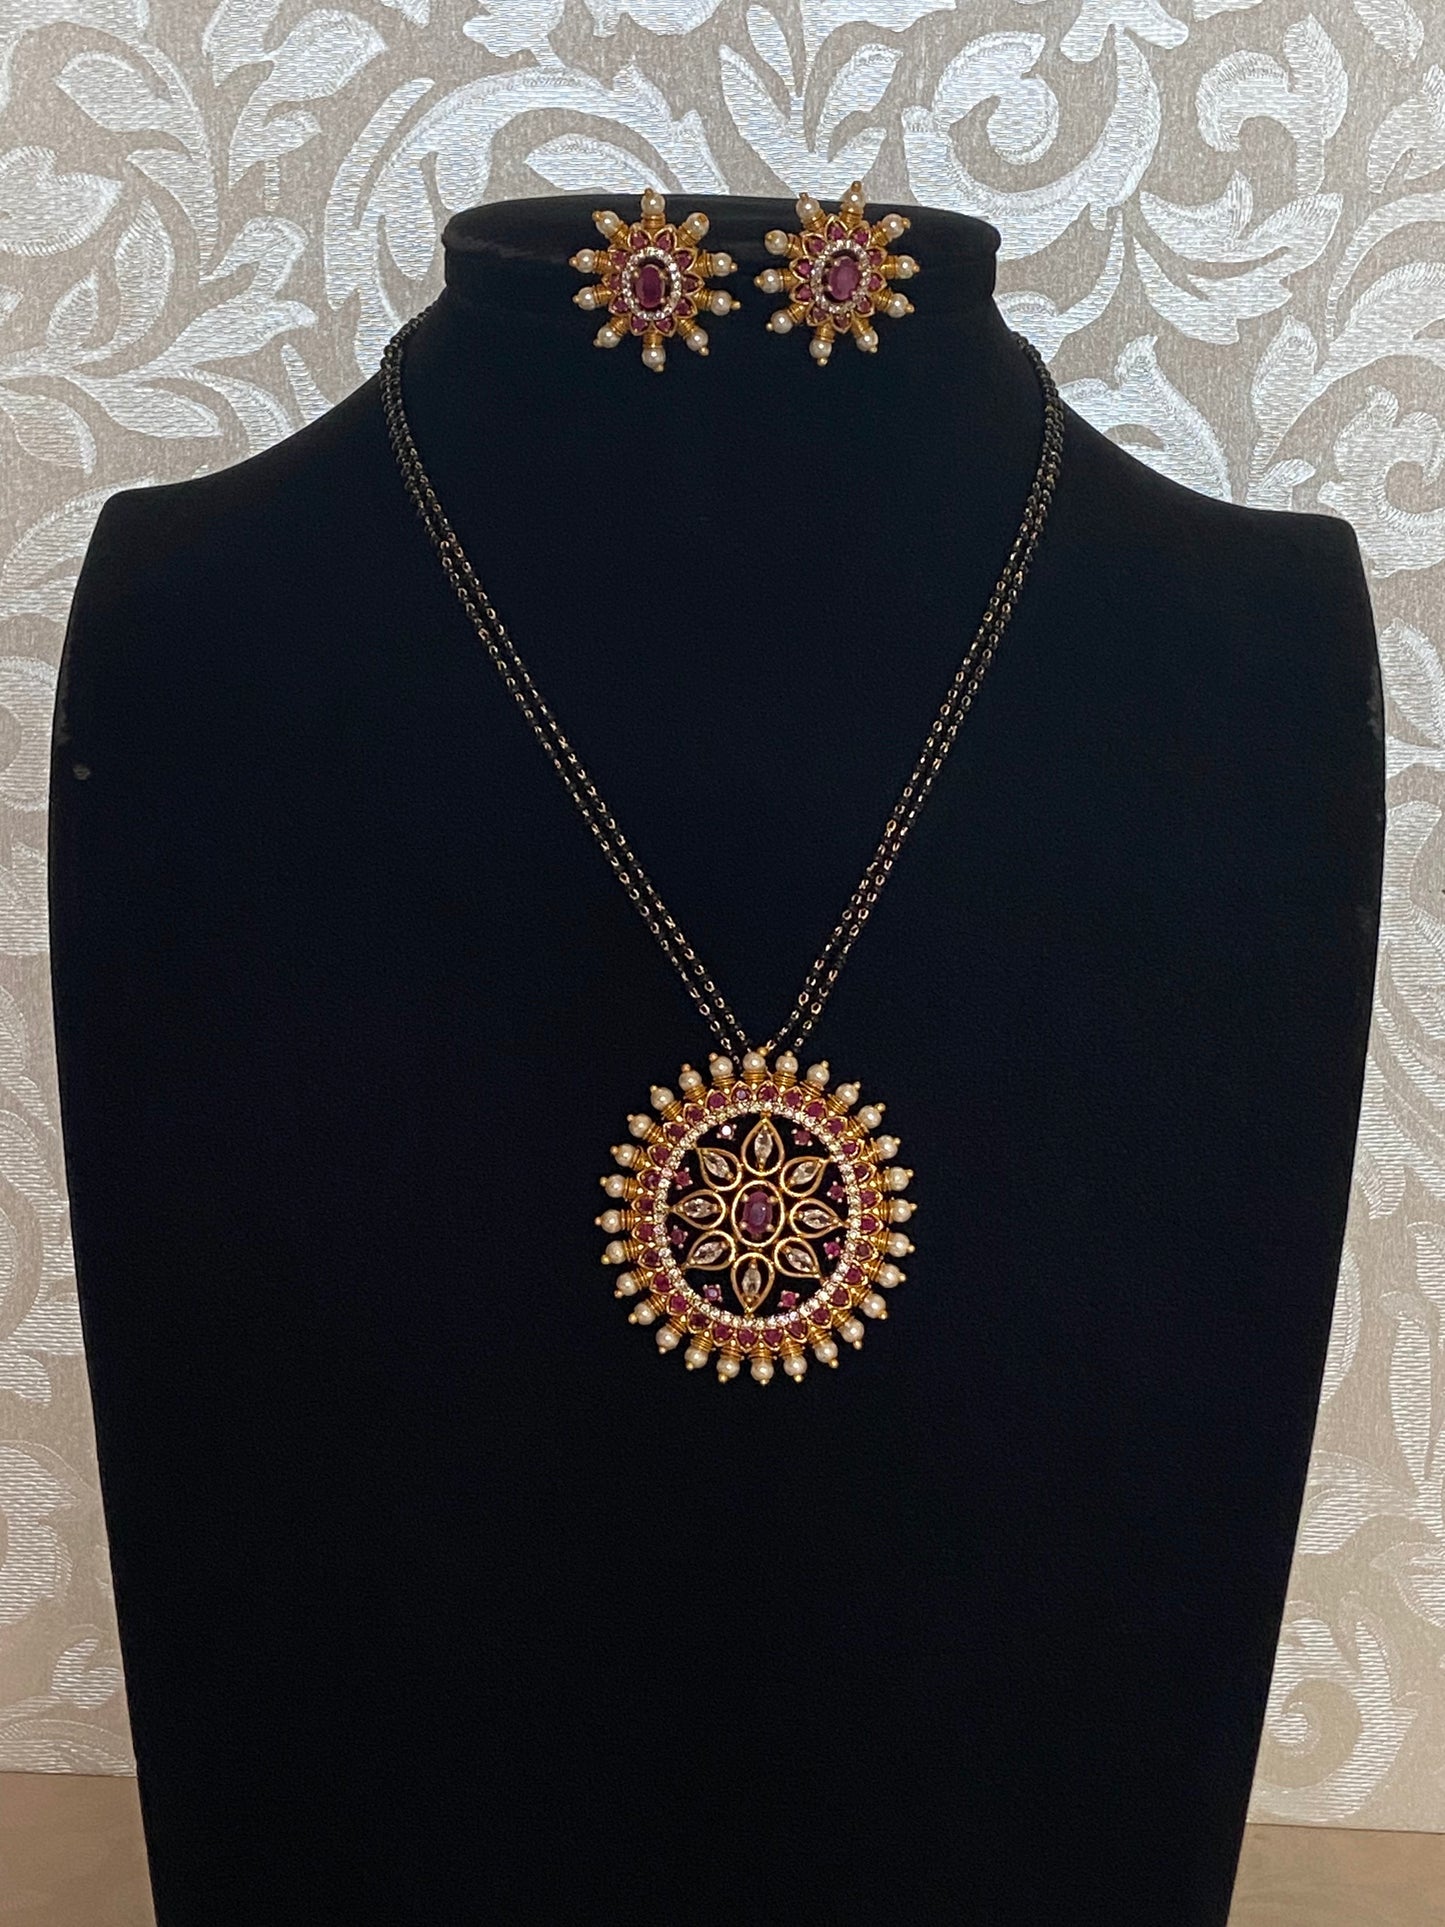 Ad pendant mangalsutra | black beads necklace